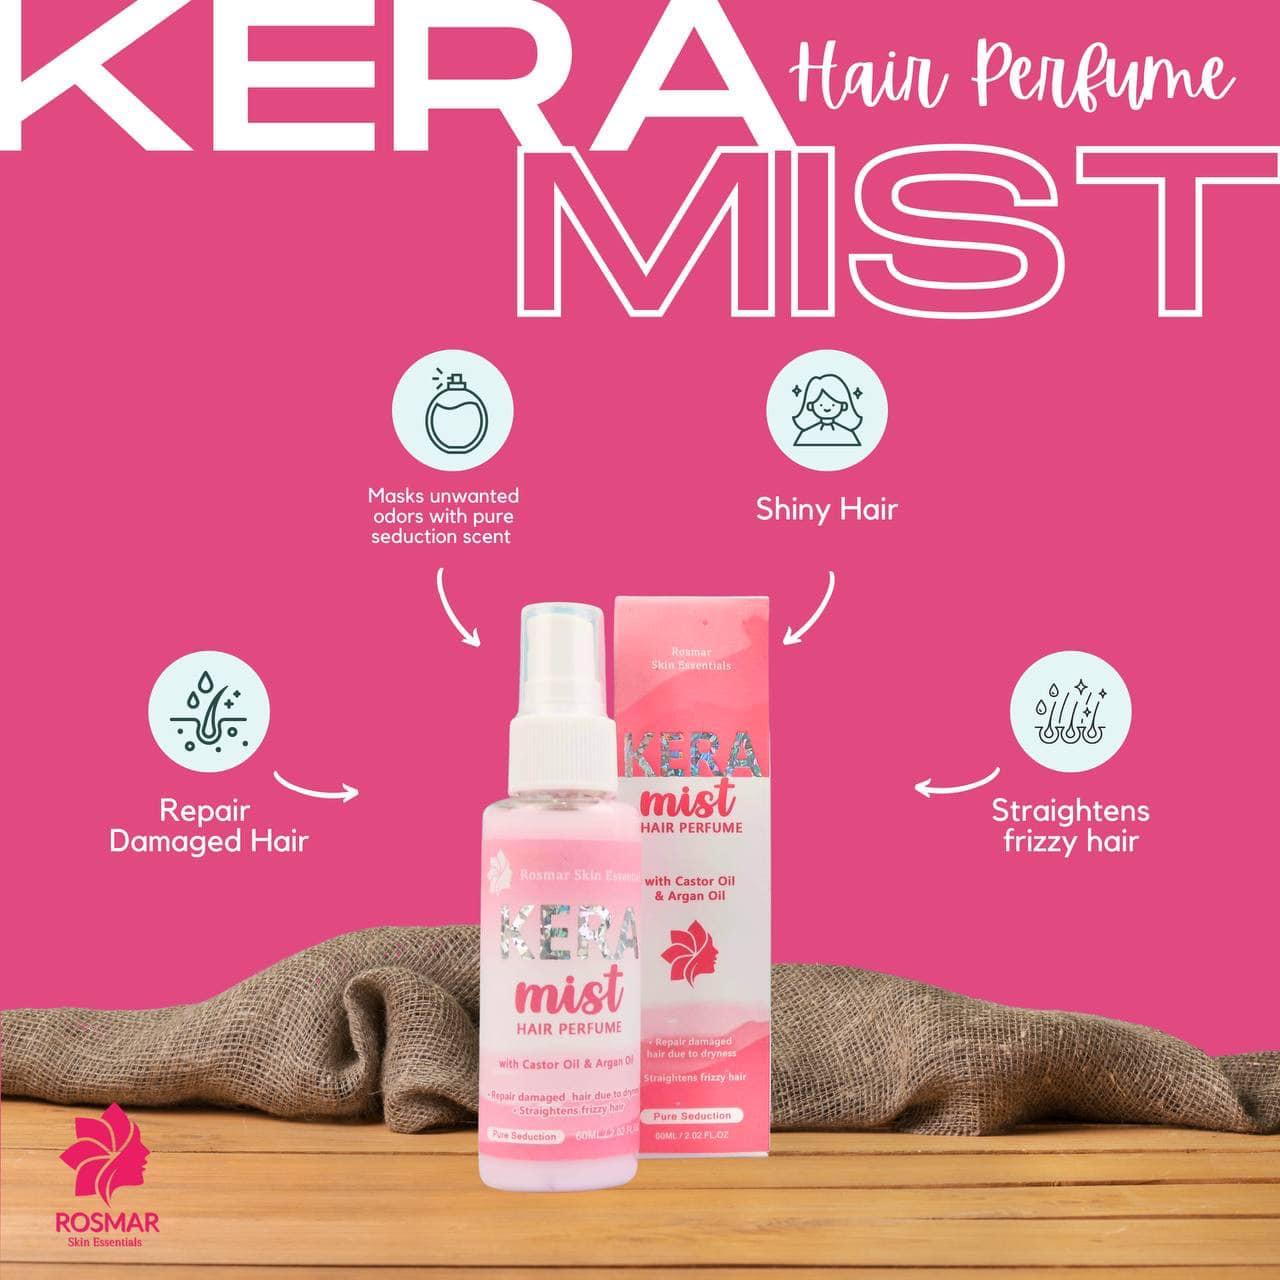 Rosmar Kera Mist Hair Perfume